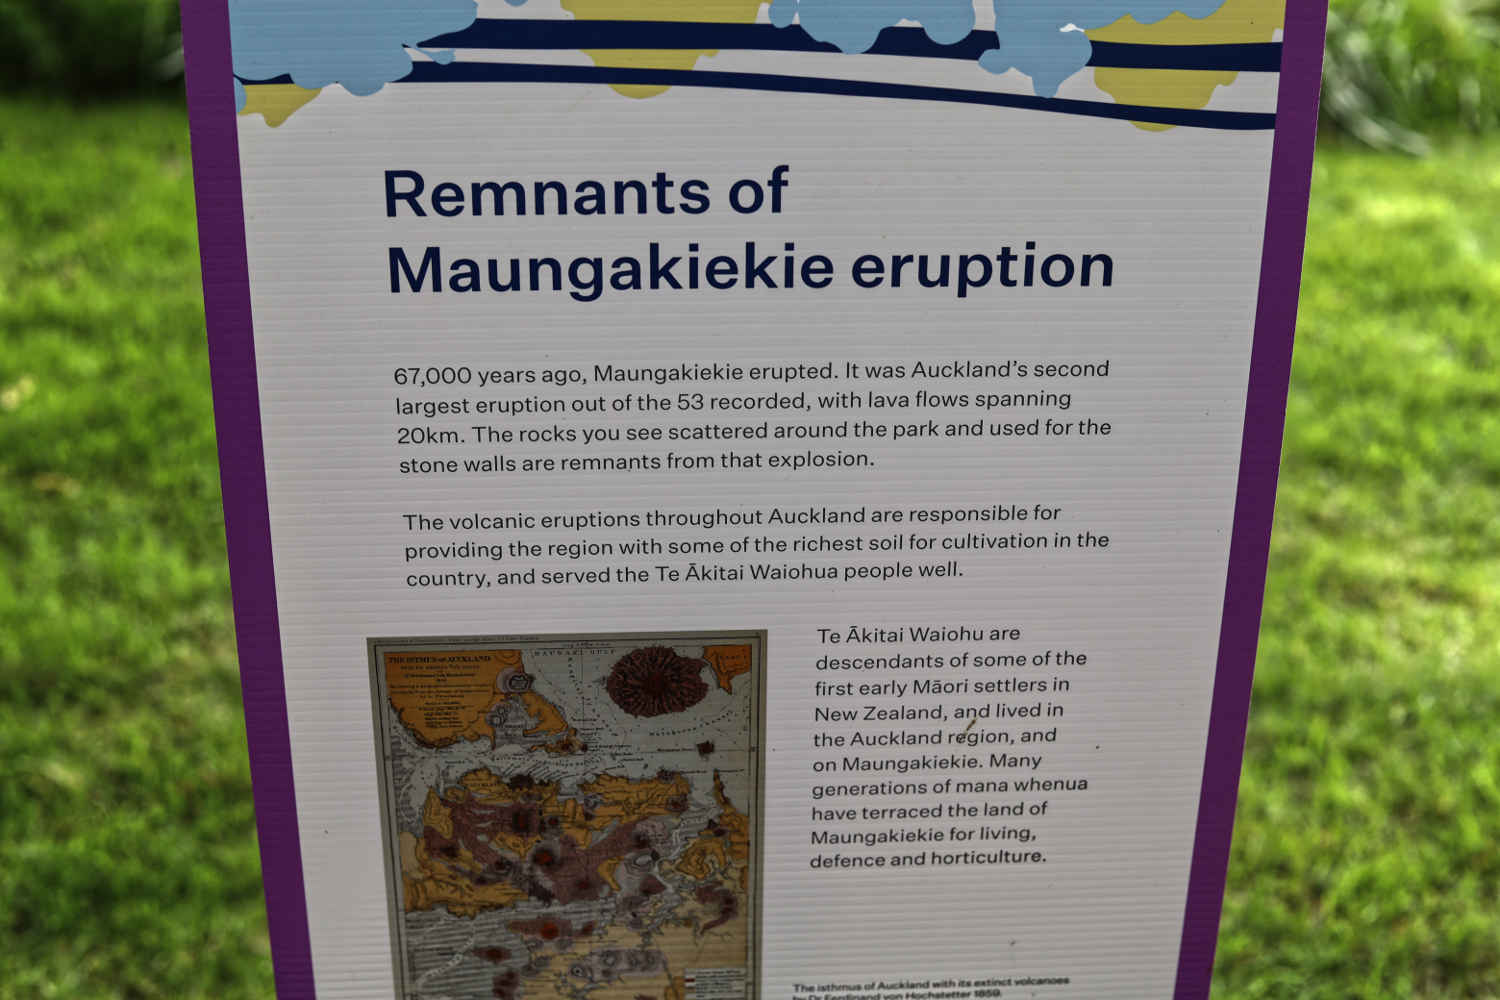 Cornwall Park historic description notice, Auckland New Zealand